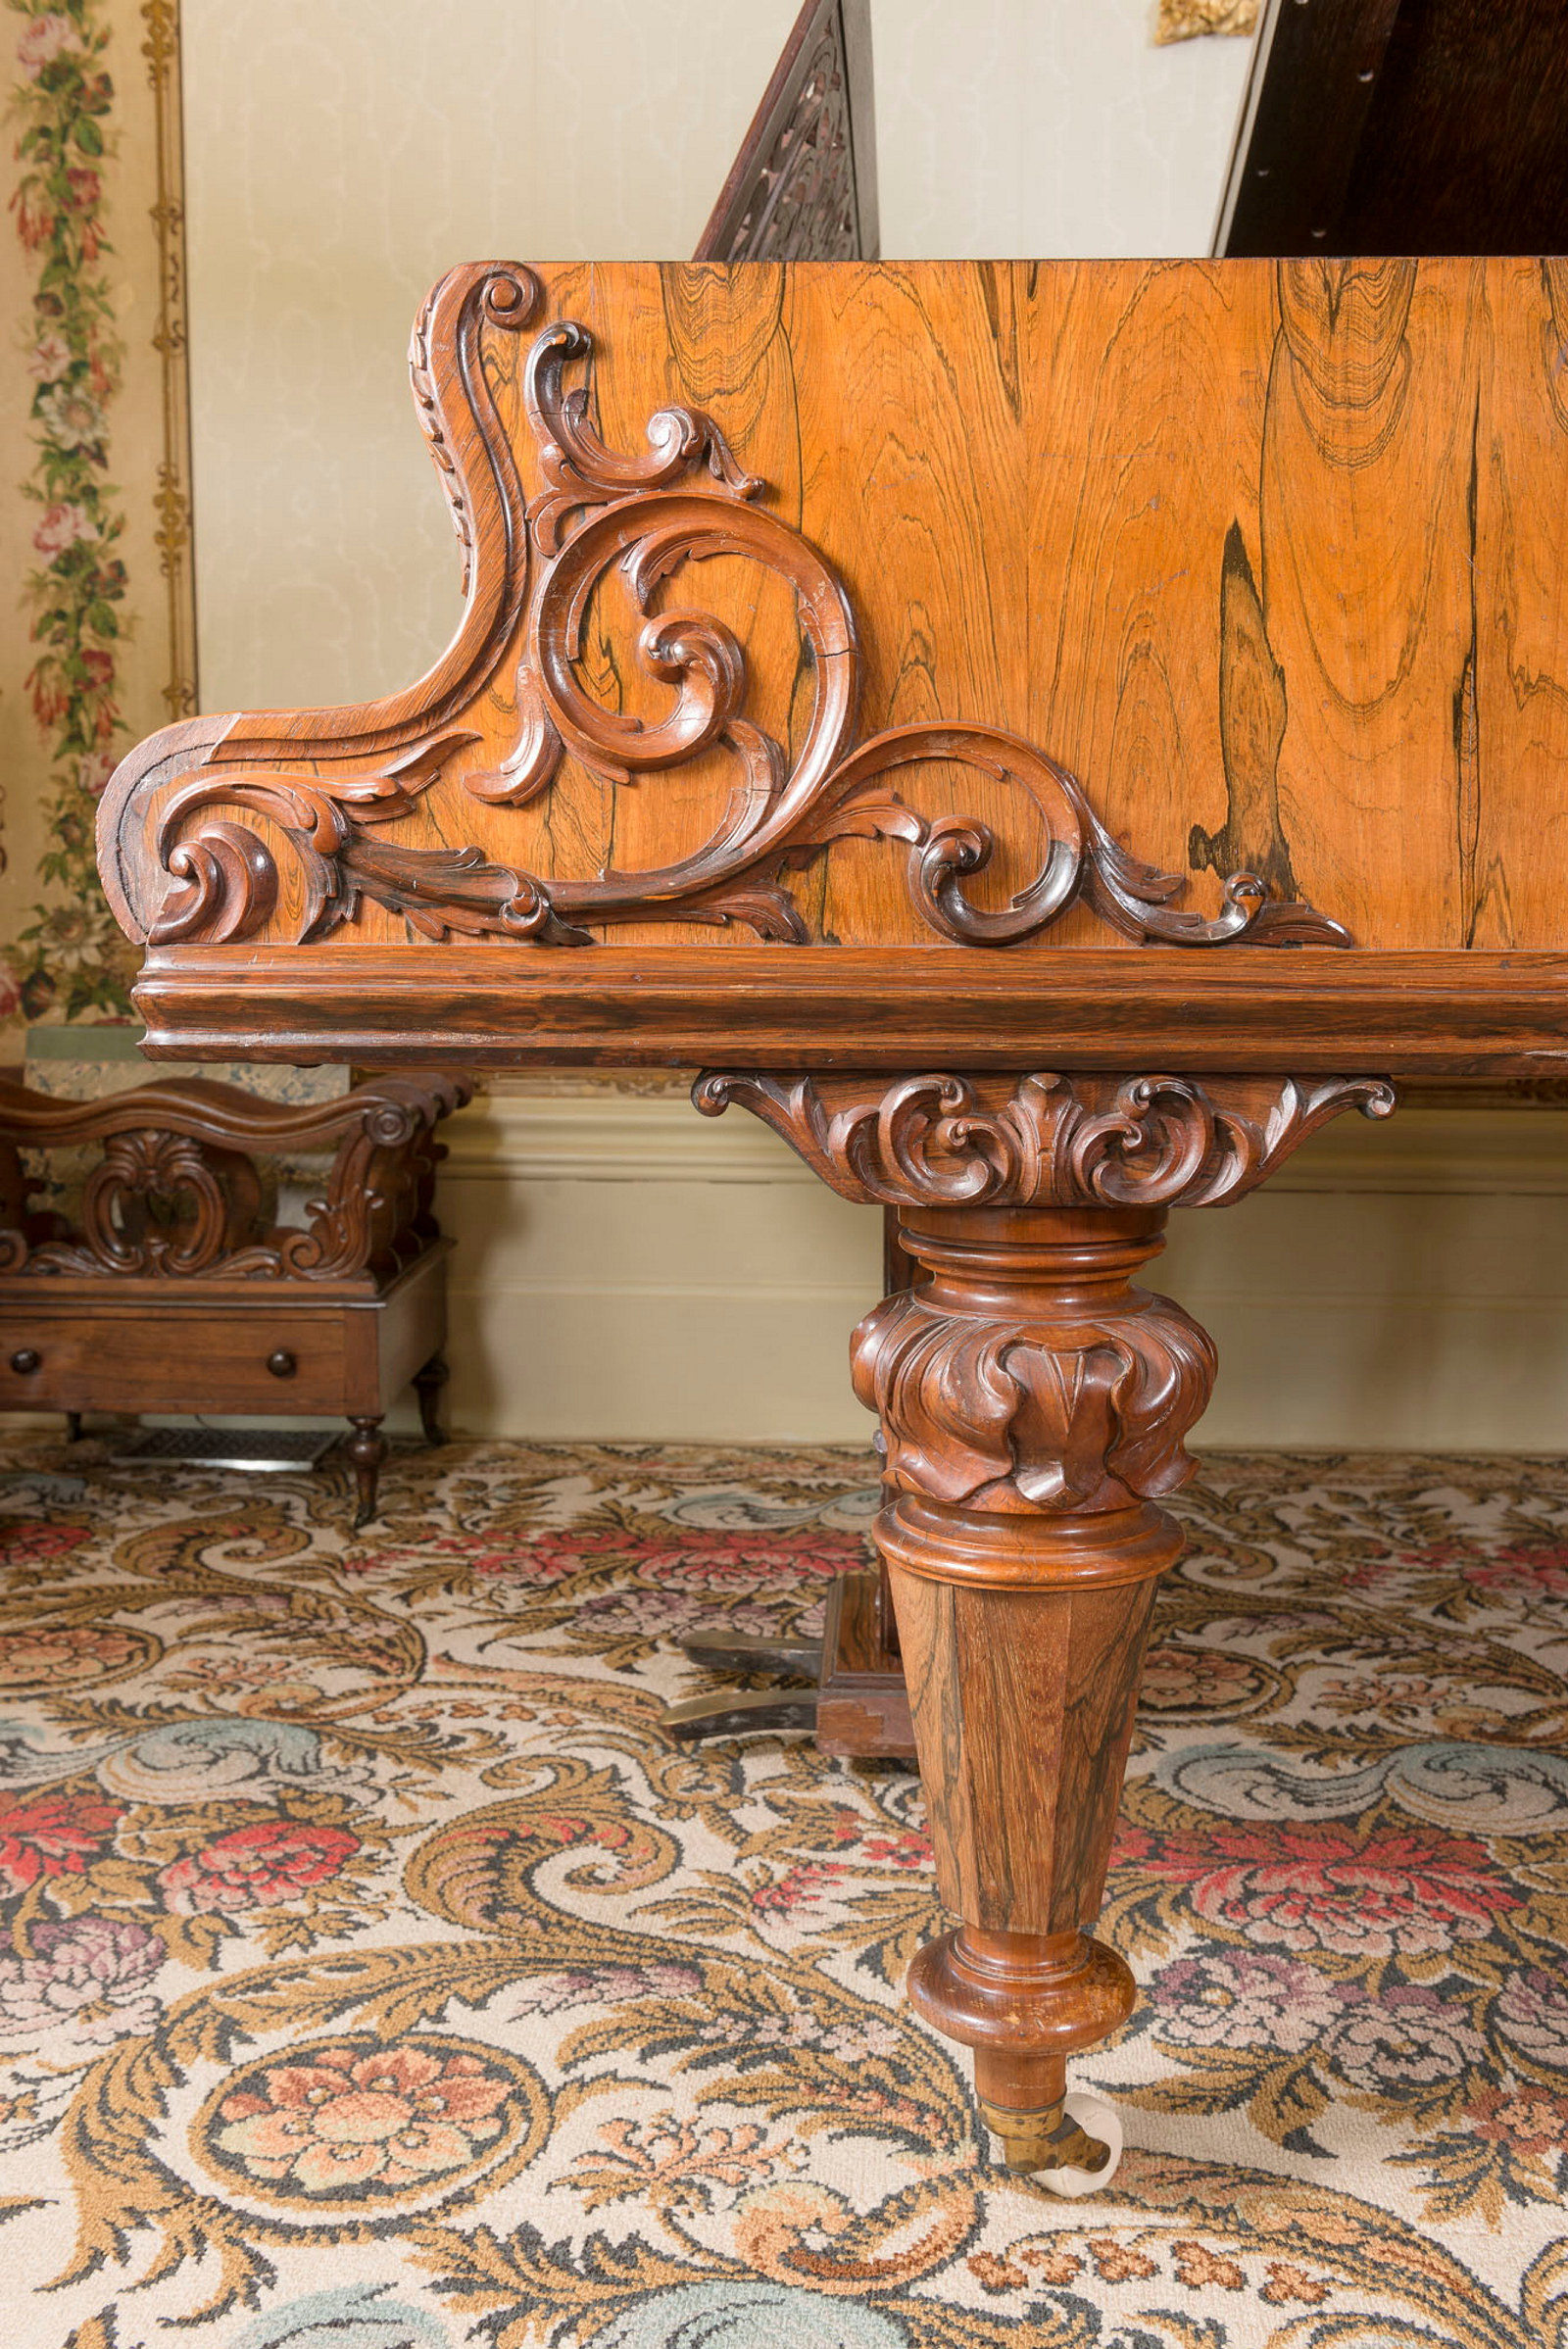 Detail of ornate carved wood.